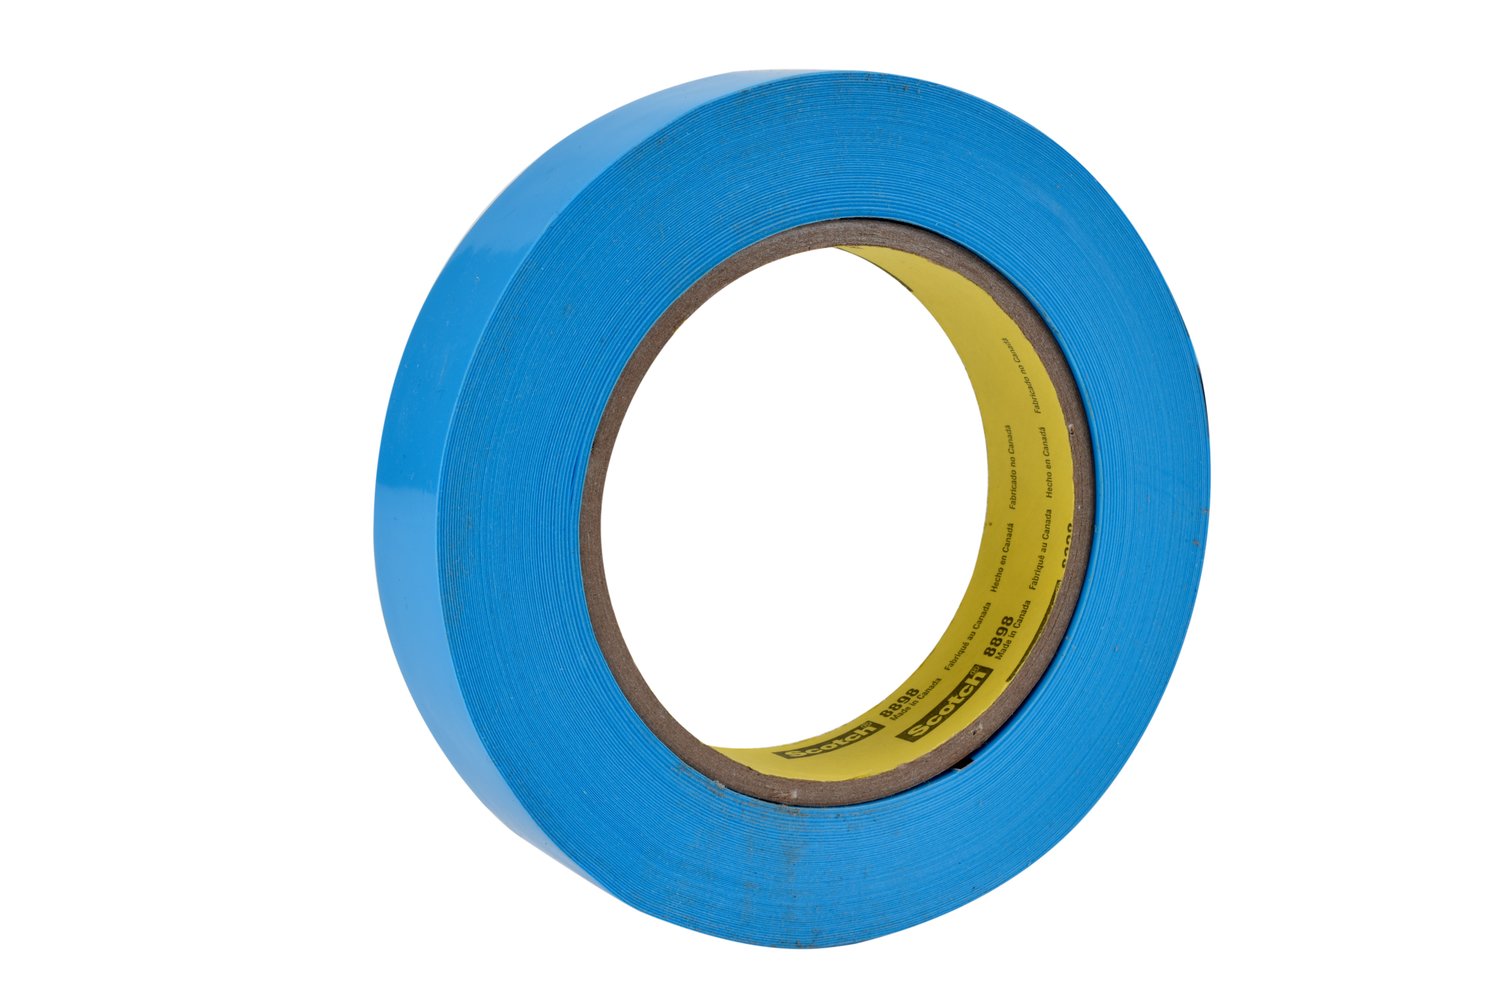 7000123850 - Scotch Strapping Tape 8898, Blue, 18 mm x 330 m, 4.6 mil, 12 rolls per
case